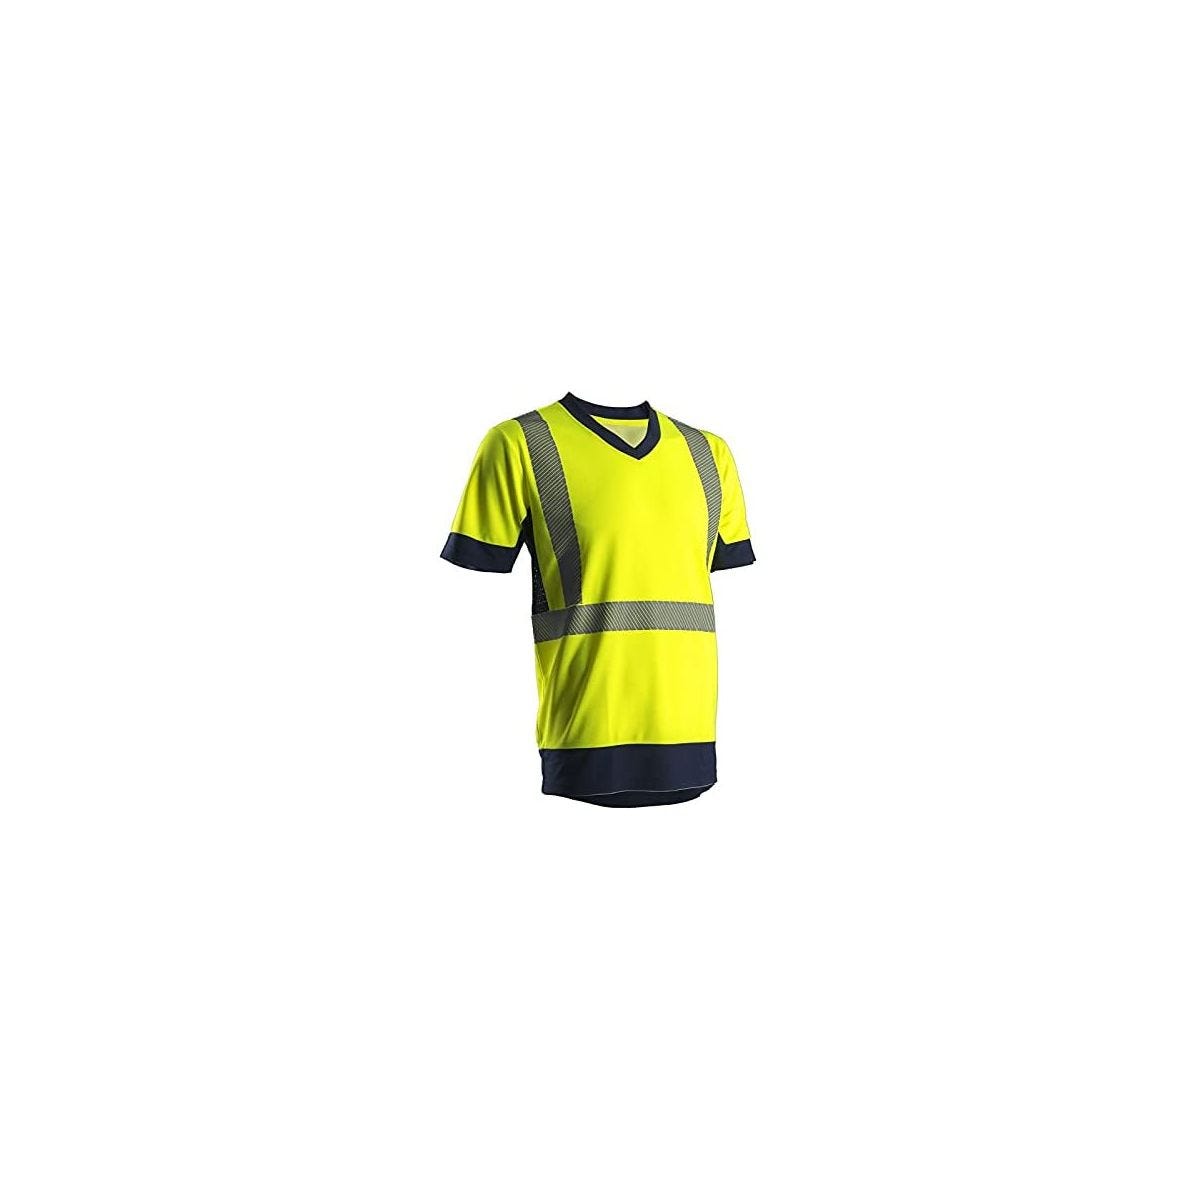 KYRIA T-shirt MC, jaune HV/marine, 100% polyester, 140g/m² - COVERGUARD - Taille M 0